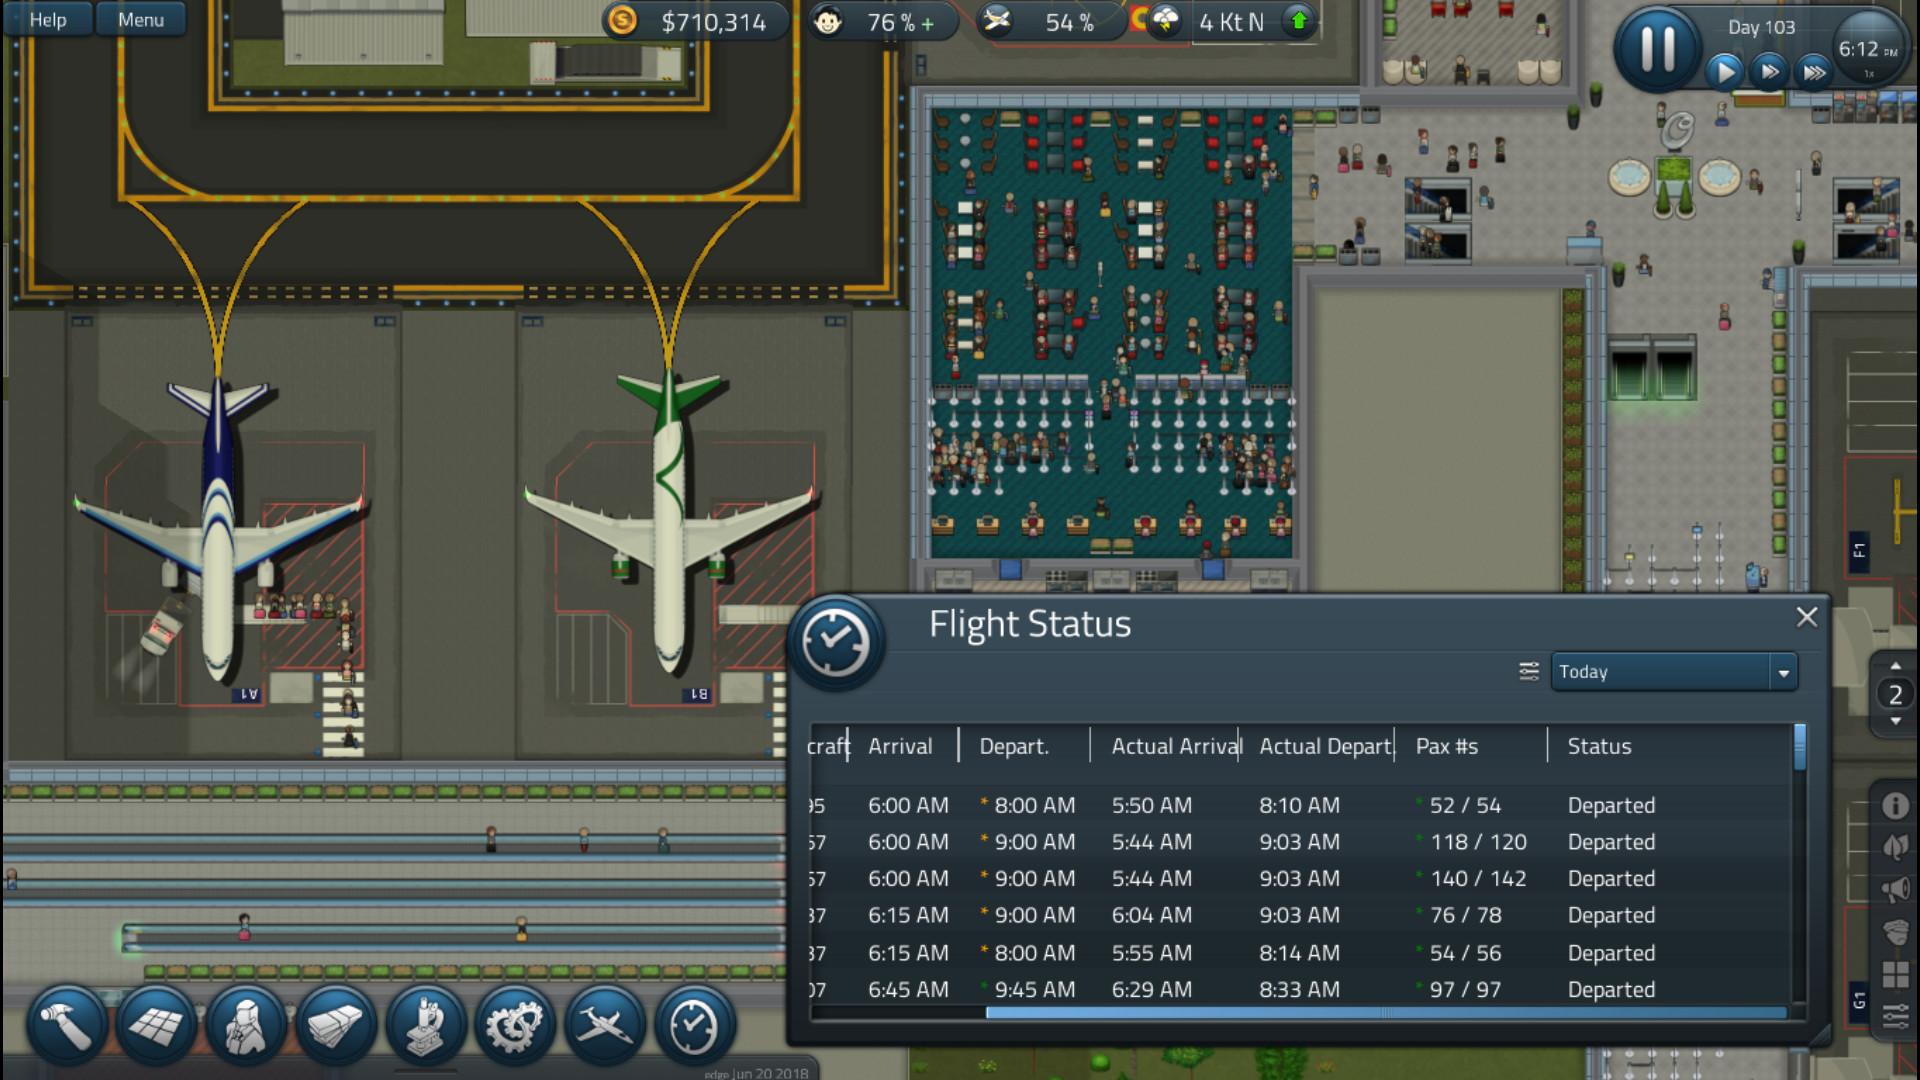 Screenshot №28 from game SimAirport